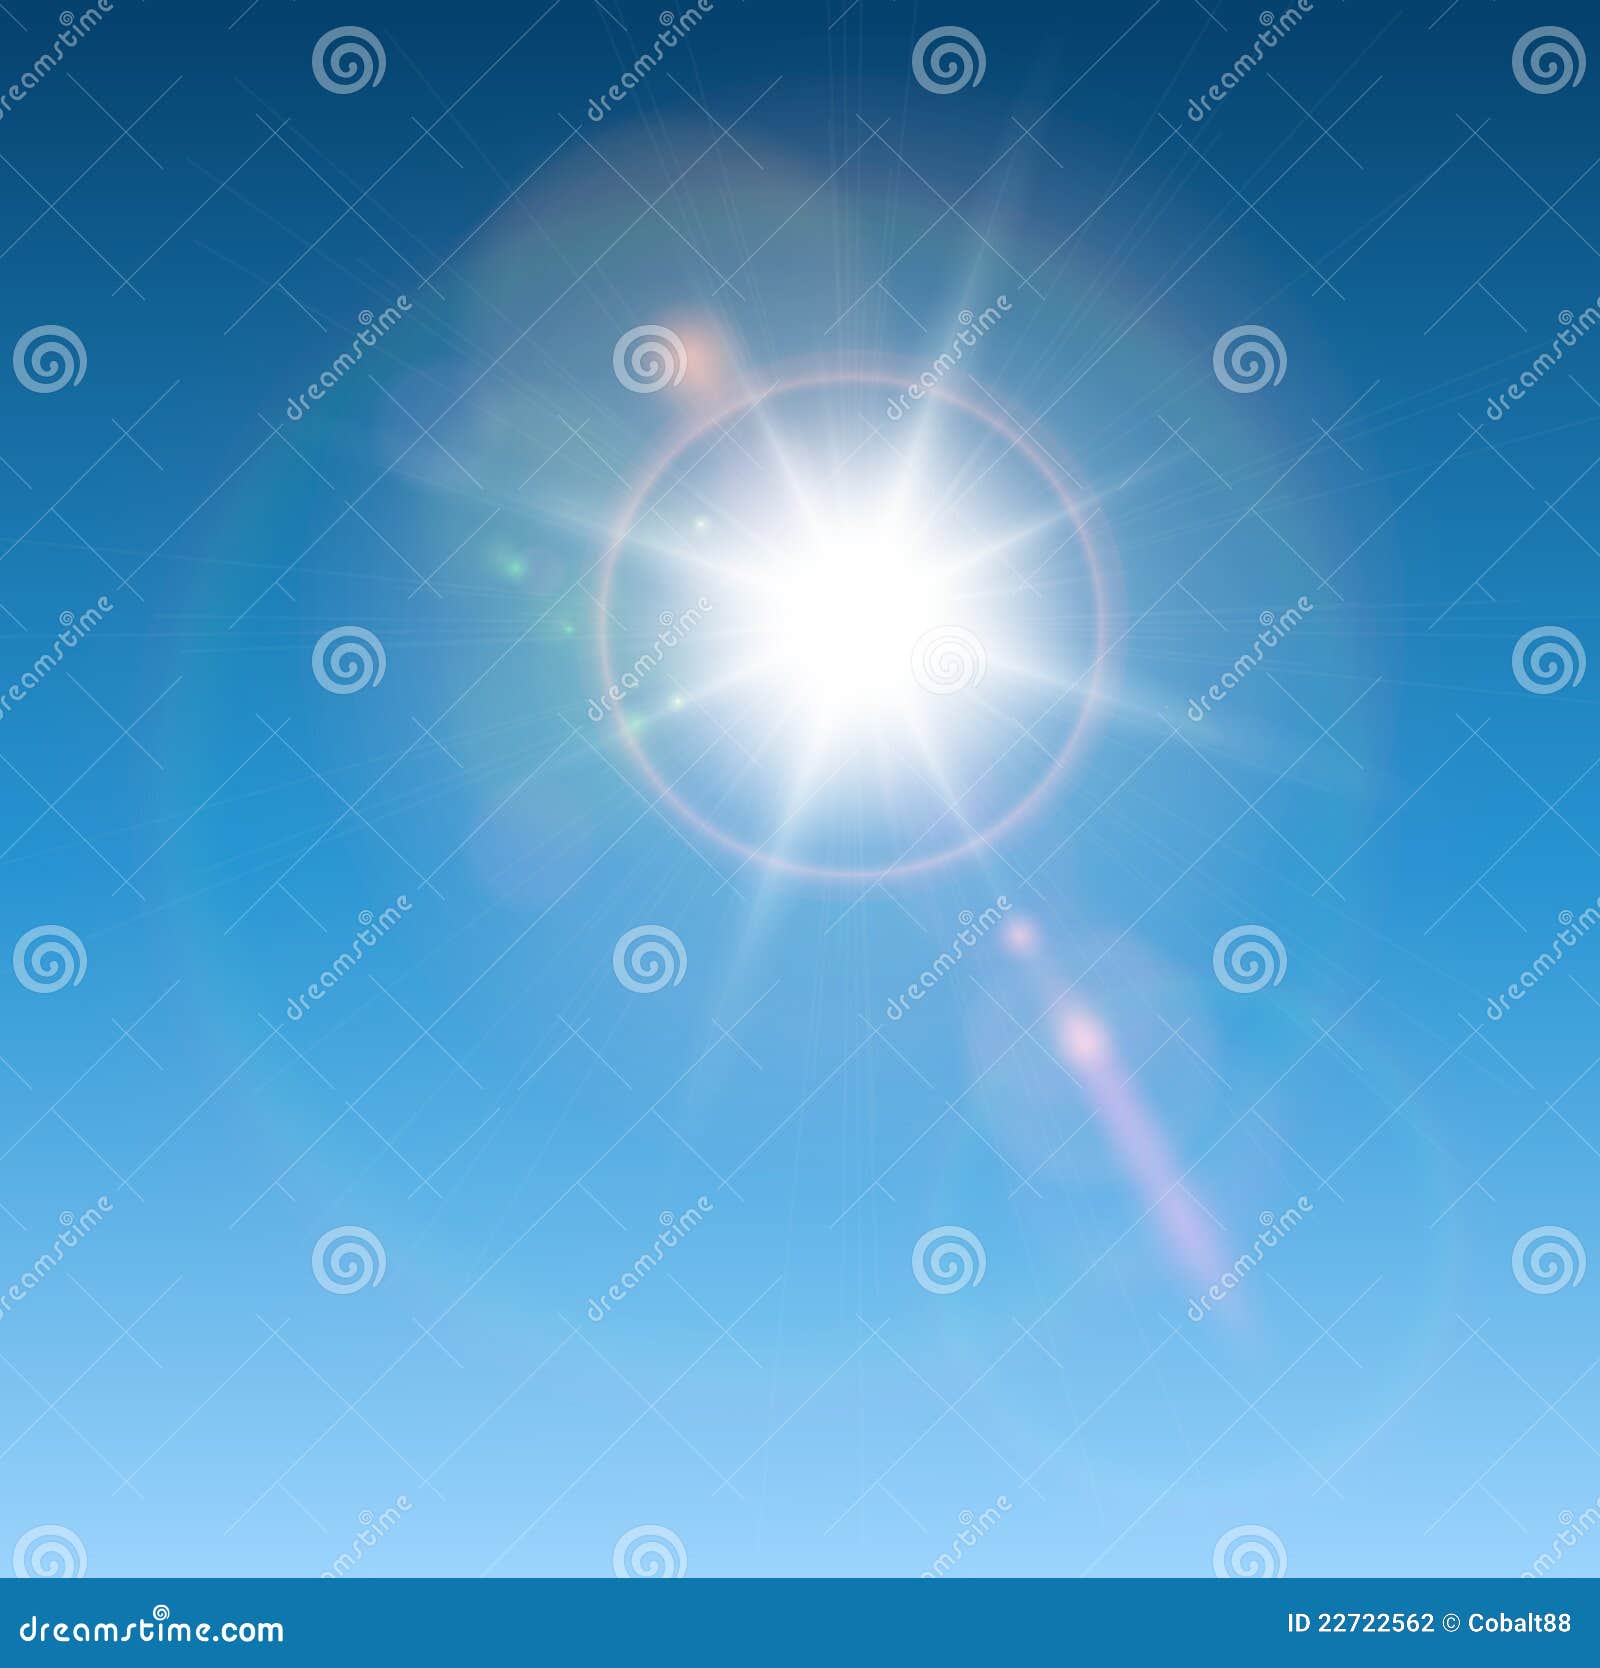 sun with lens flare